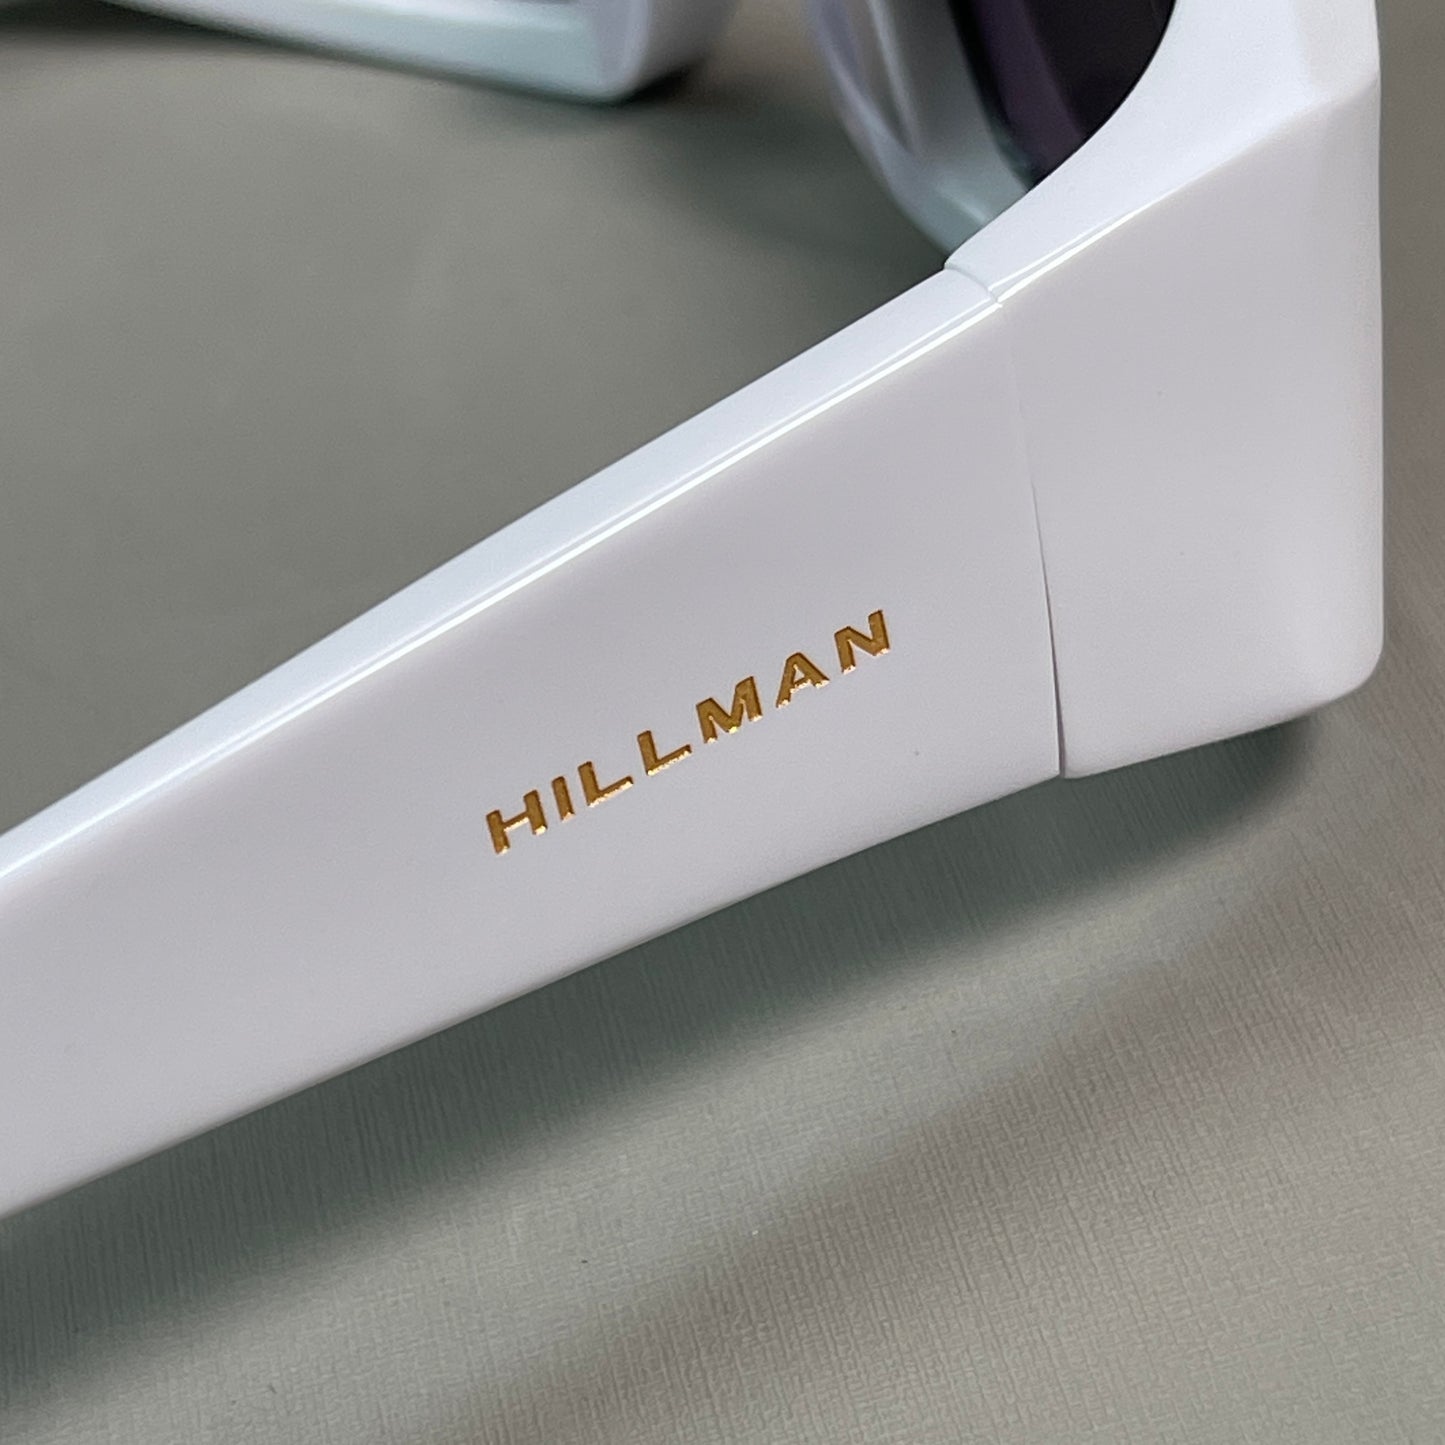 HILLMAN Skyhill X Majo :) Sunglasses Sz S White 75637414 (New)